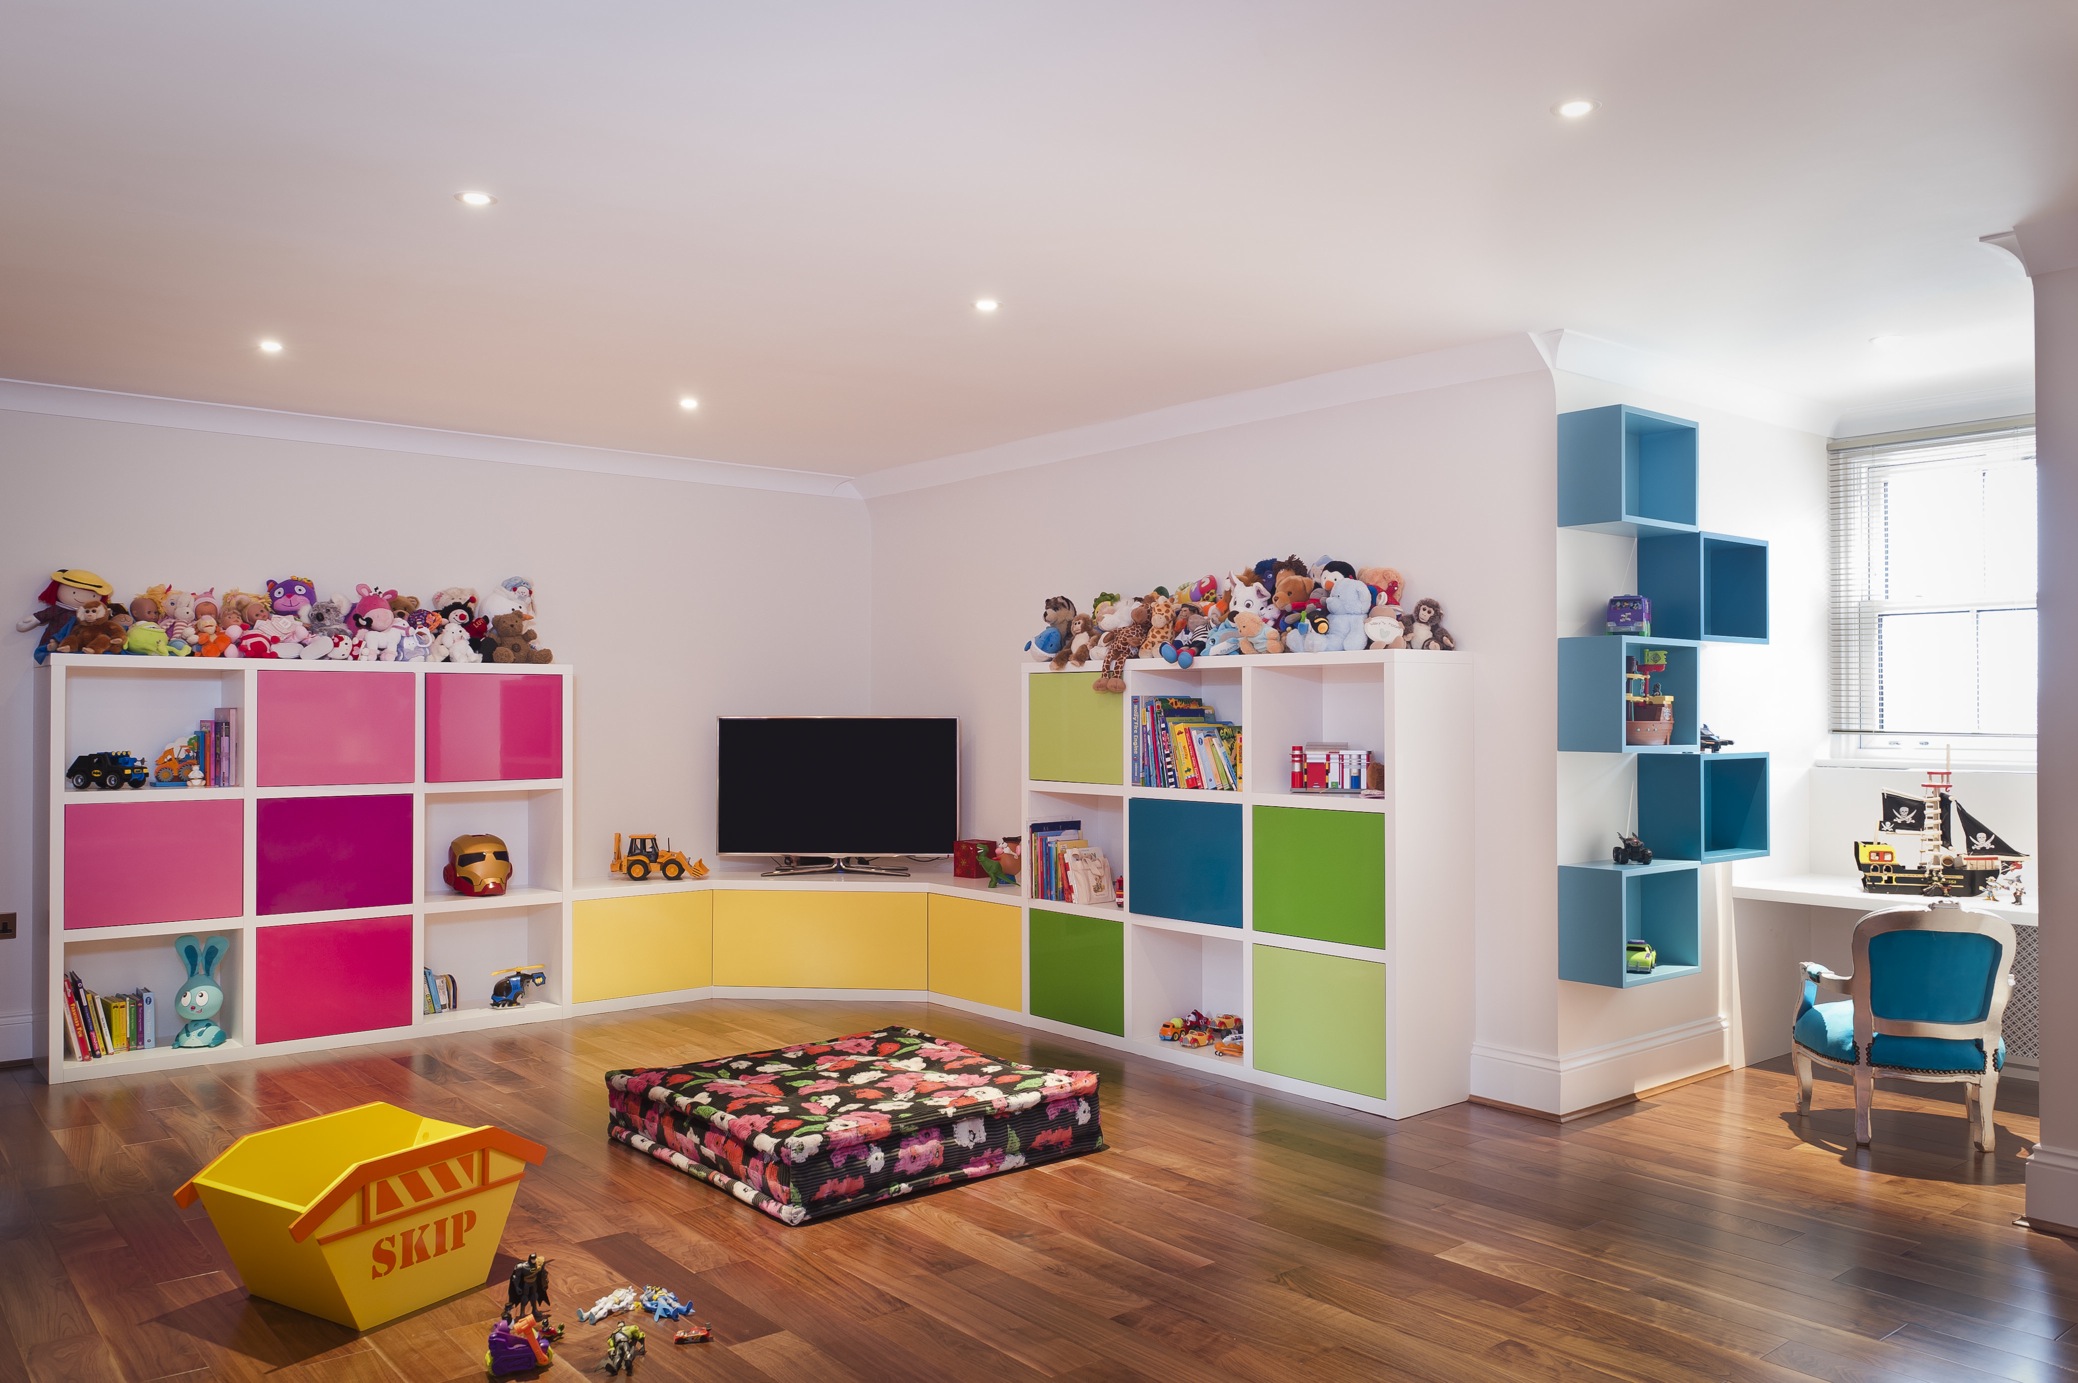 Kids And Decor: Designing Stylish Yet Child Friendly Spaces